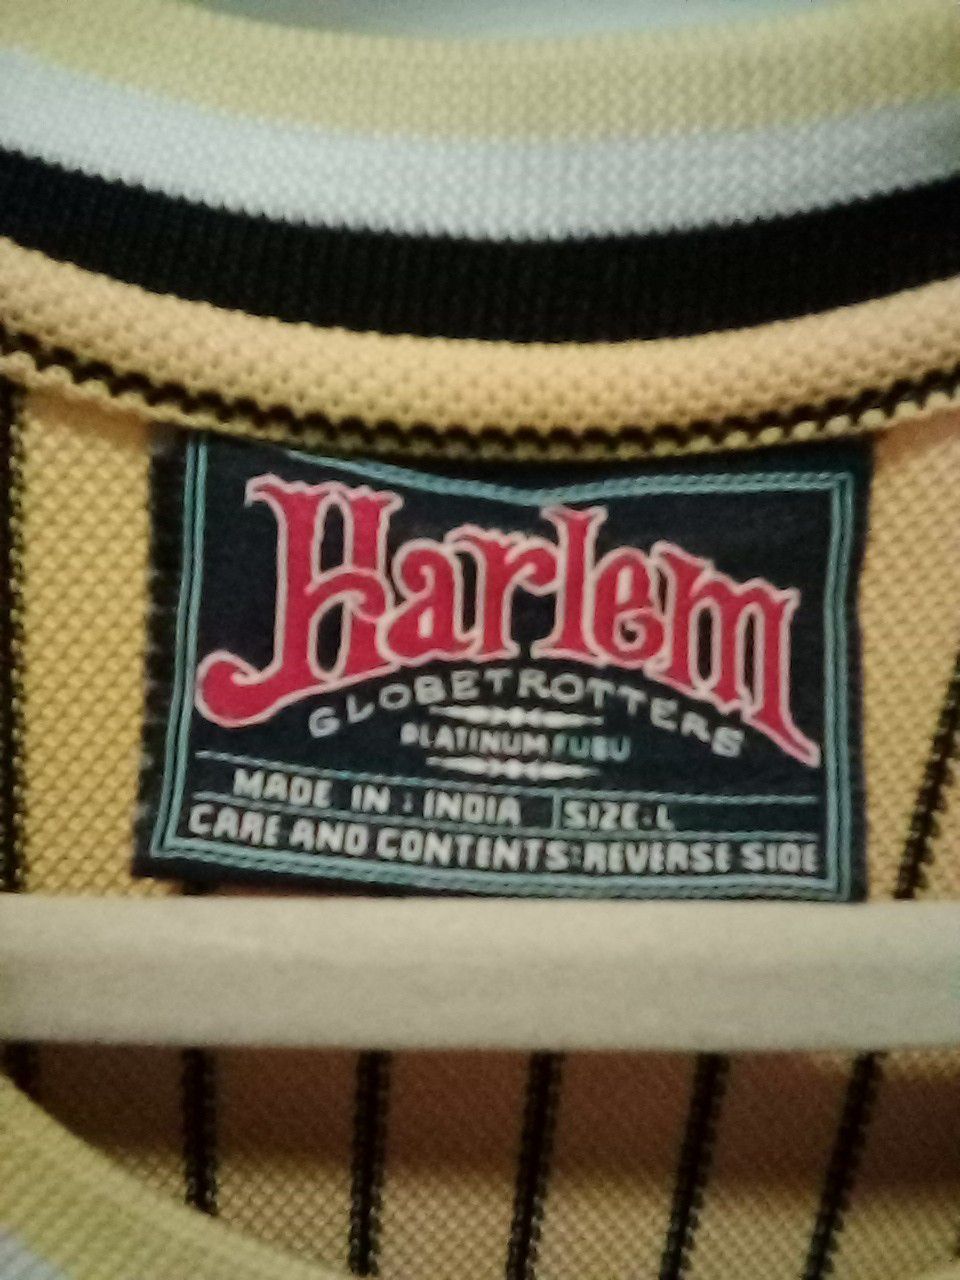 1927 Harlem Globetrotters PLATINUM FUBU Jersey